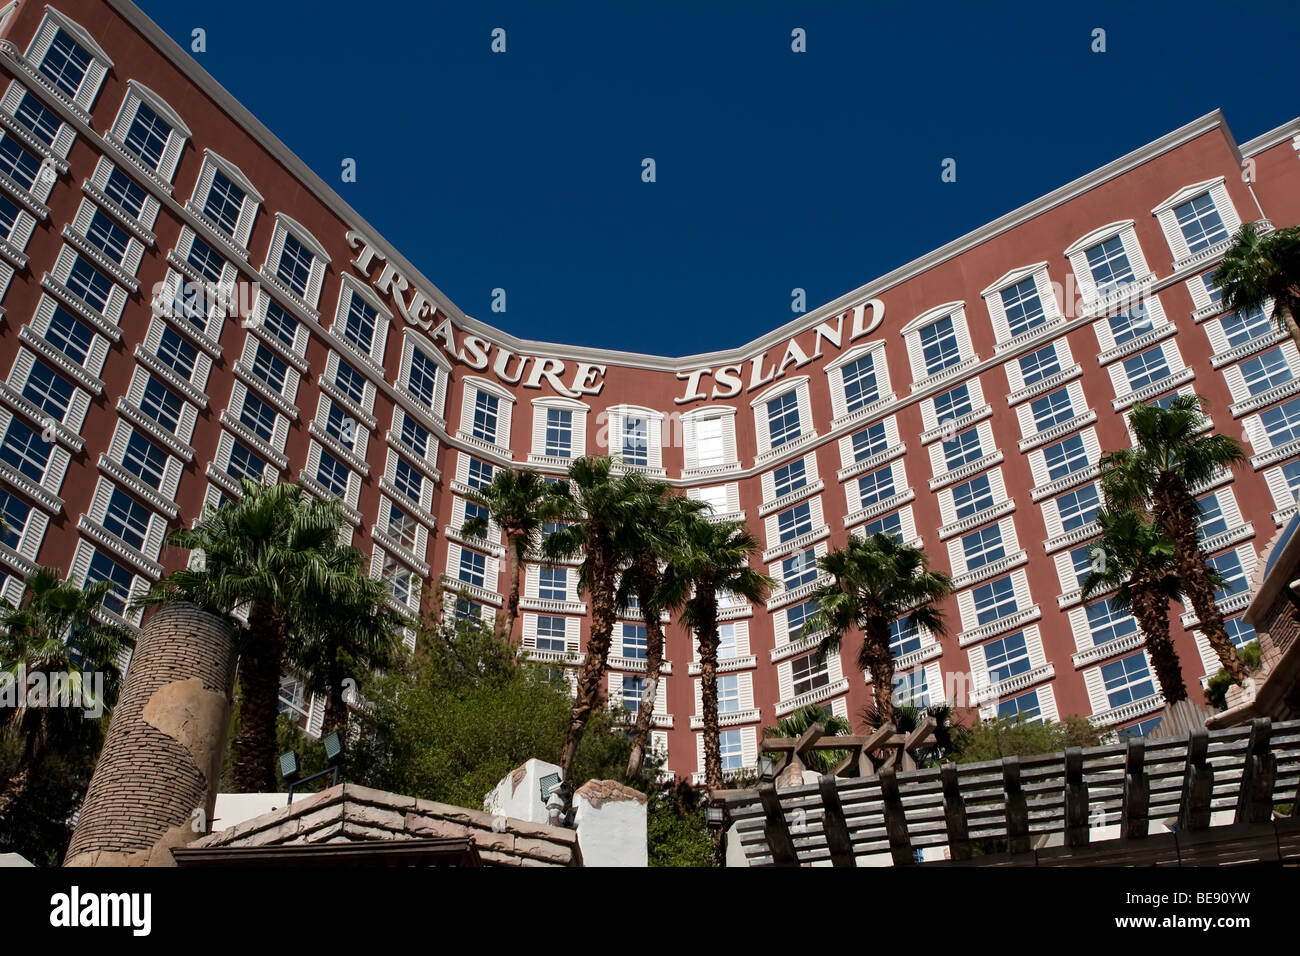 The Treasure Hotel in Las Vegas, Nevada, USA Stock Photo